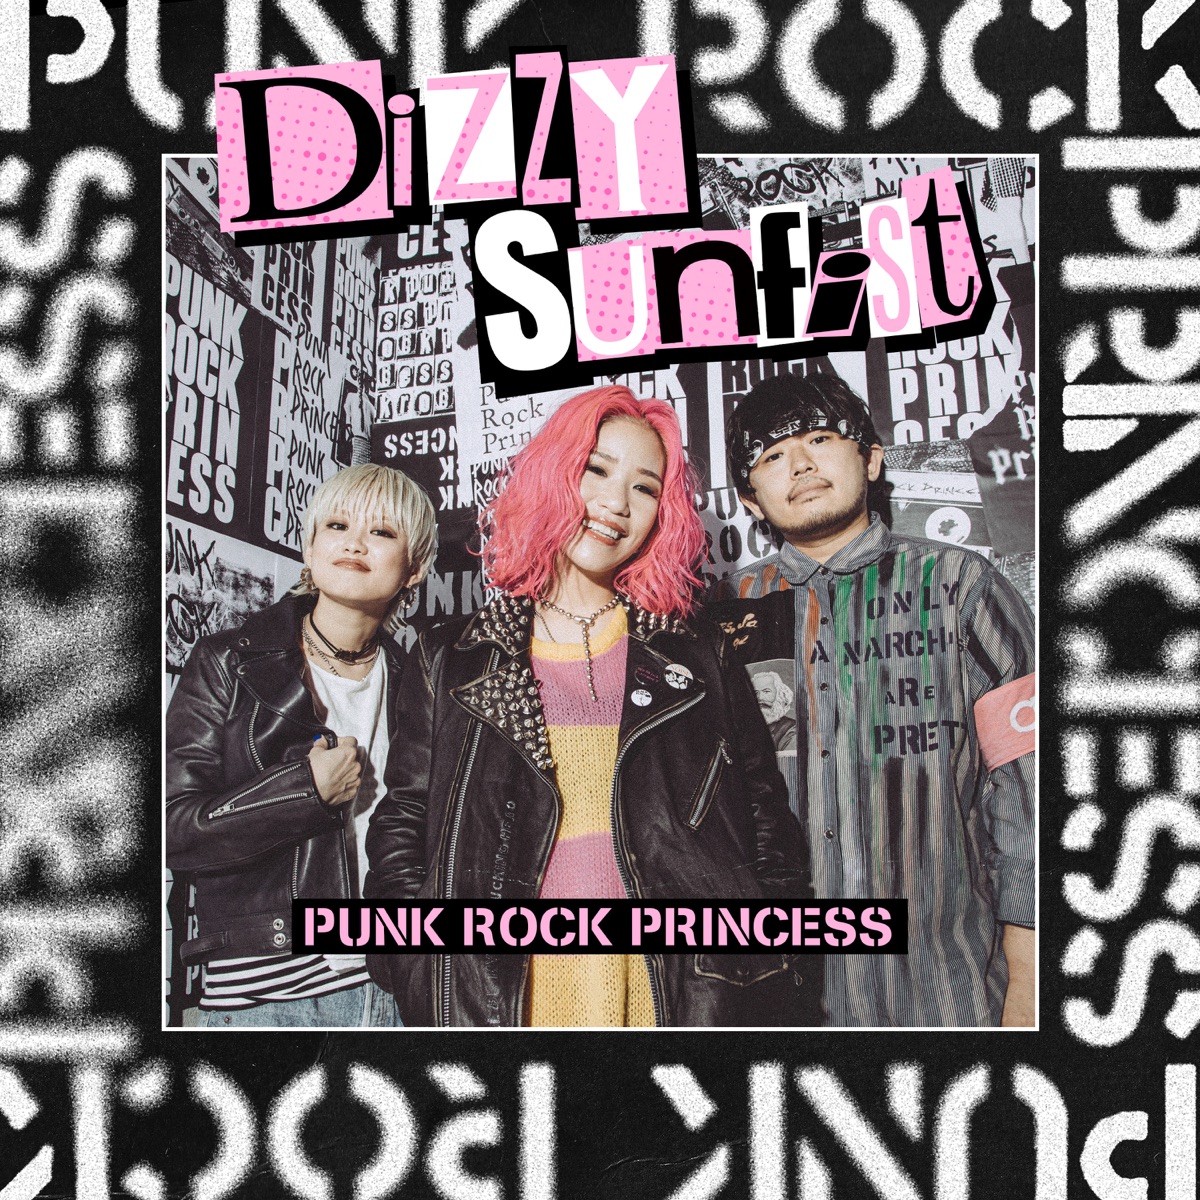 『Dizzy Sunfist - Punk Rock Princess』収録の『PUNK ROCK PRINCESS』ジャケット